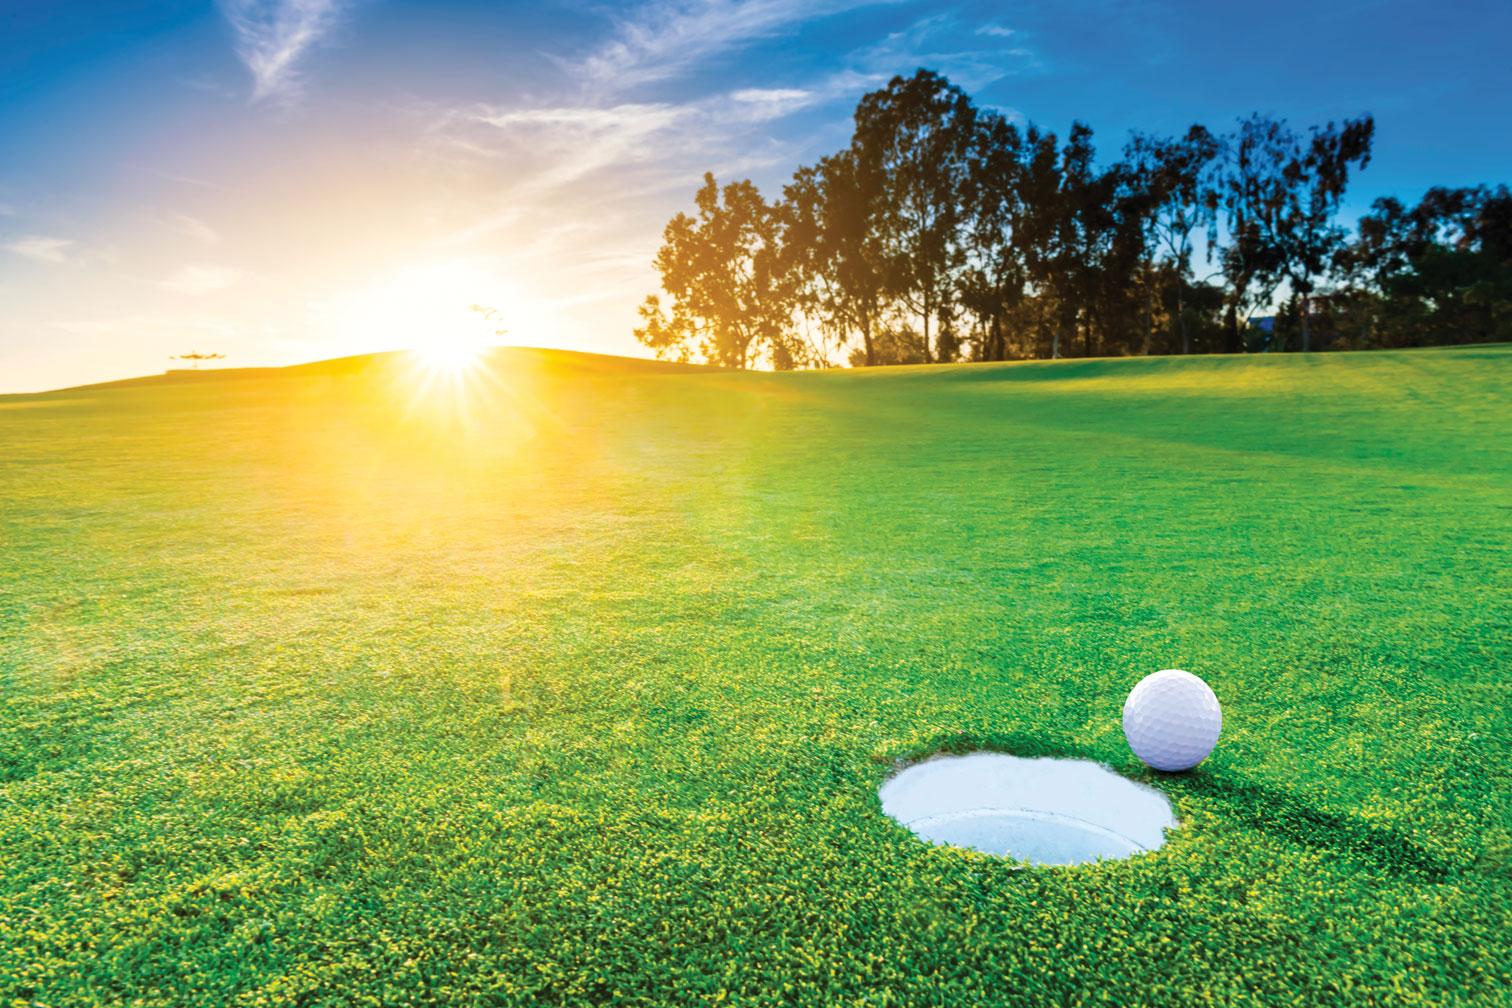 Fifth Annual Golf Tournament at Stanton Ridge to benefit Binnacle House